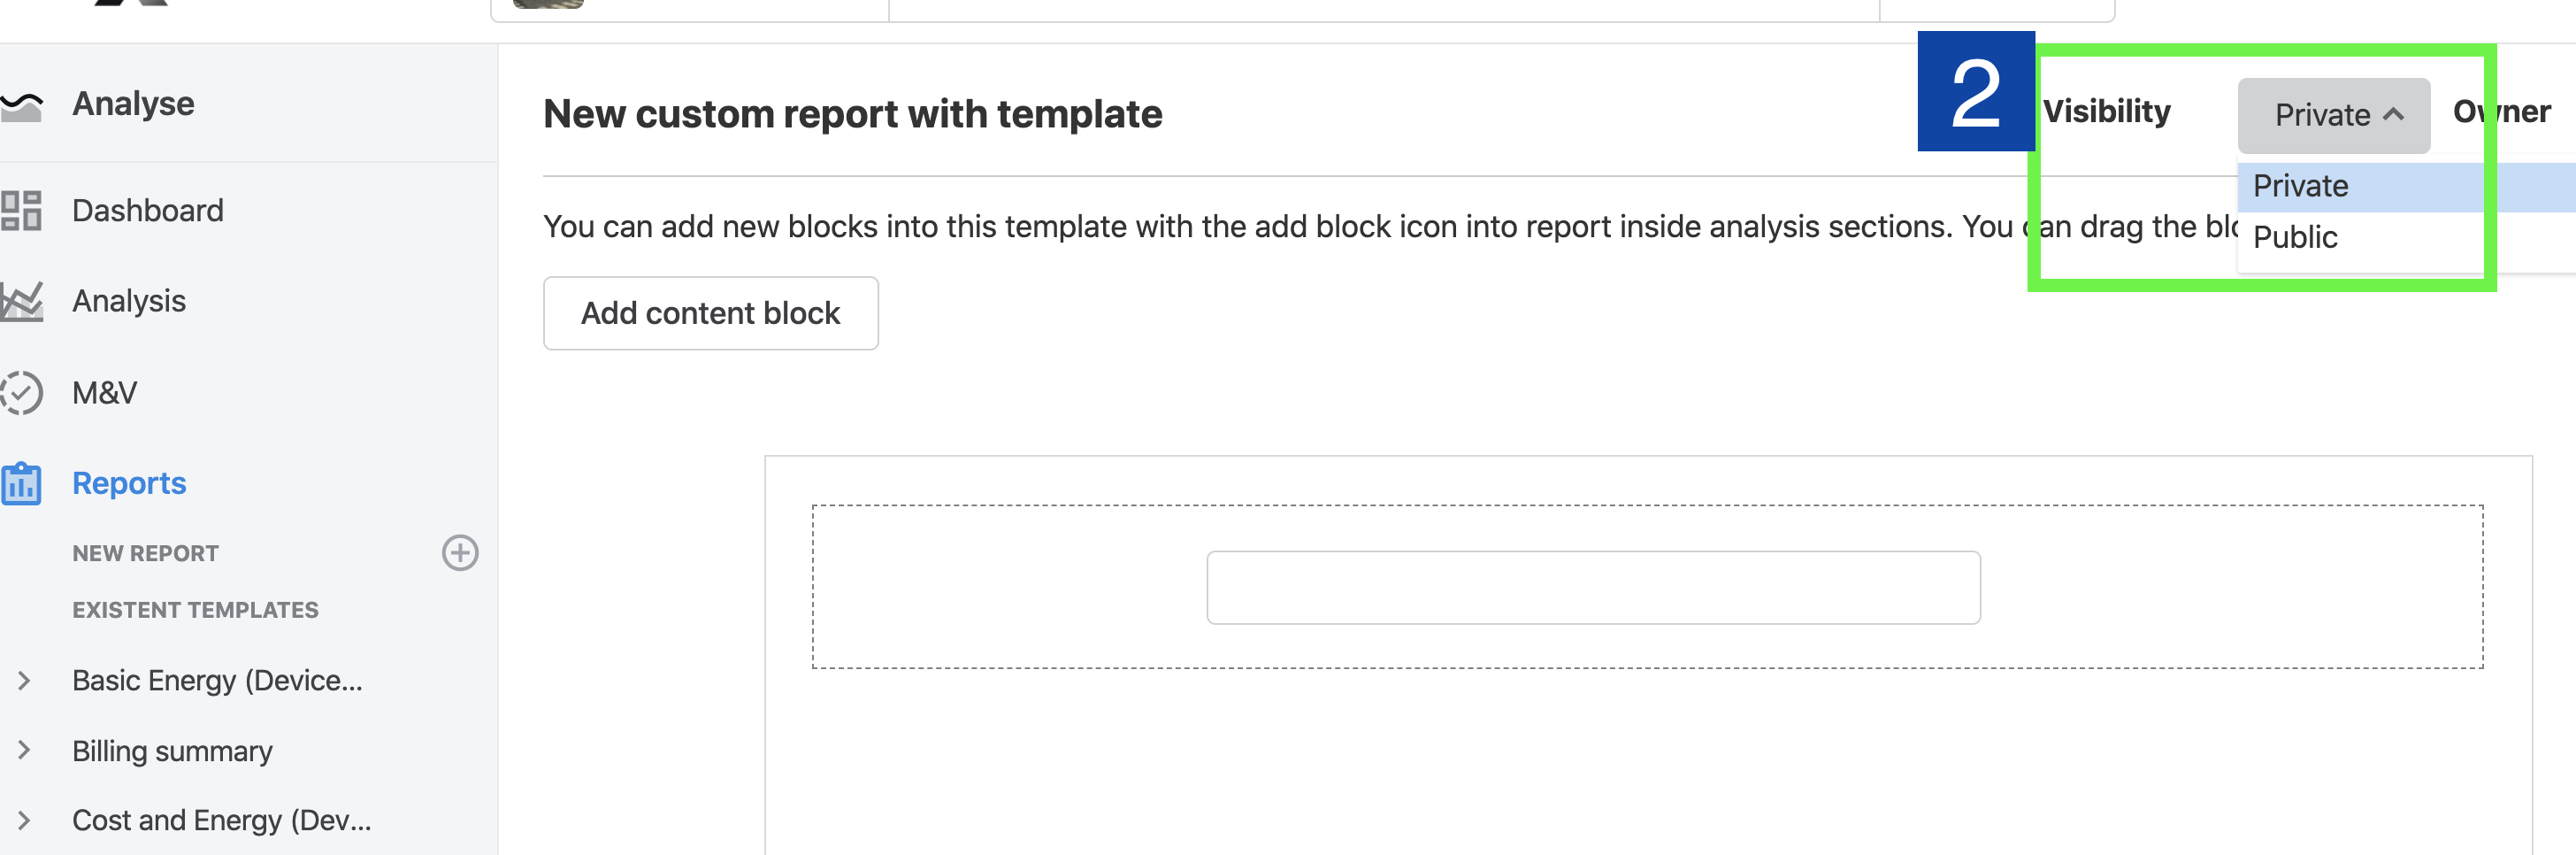 dexma-Create_a_new_custom_report_template-03.png